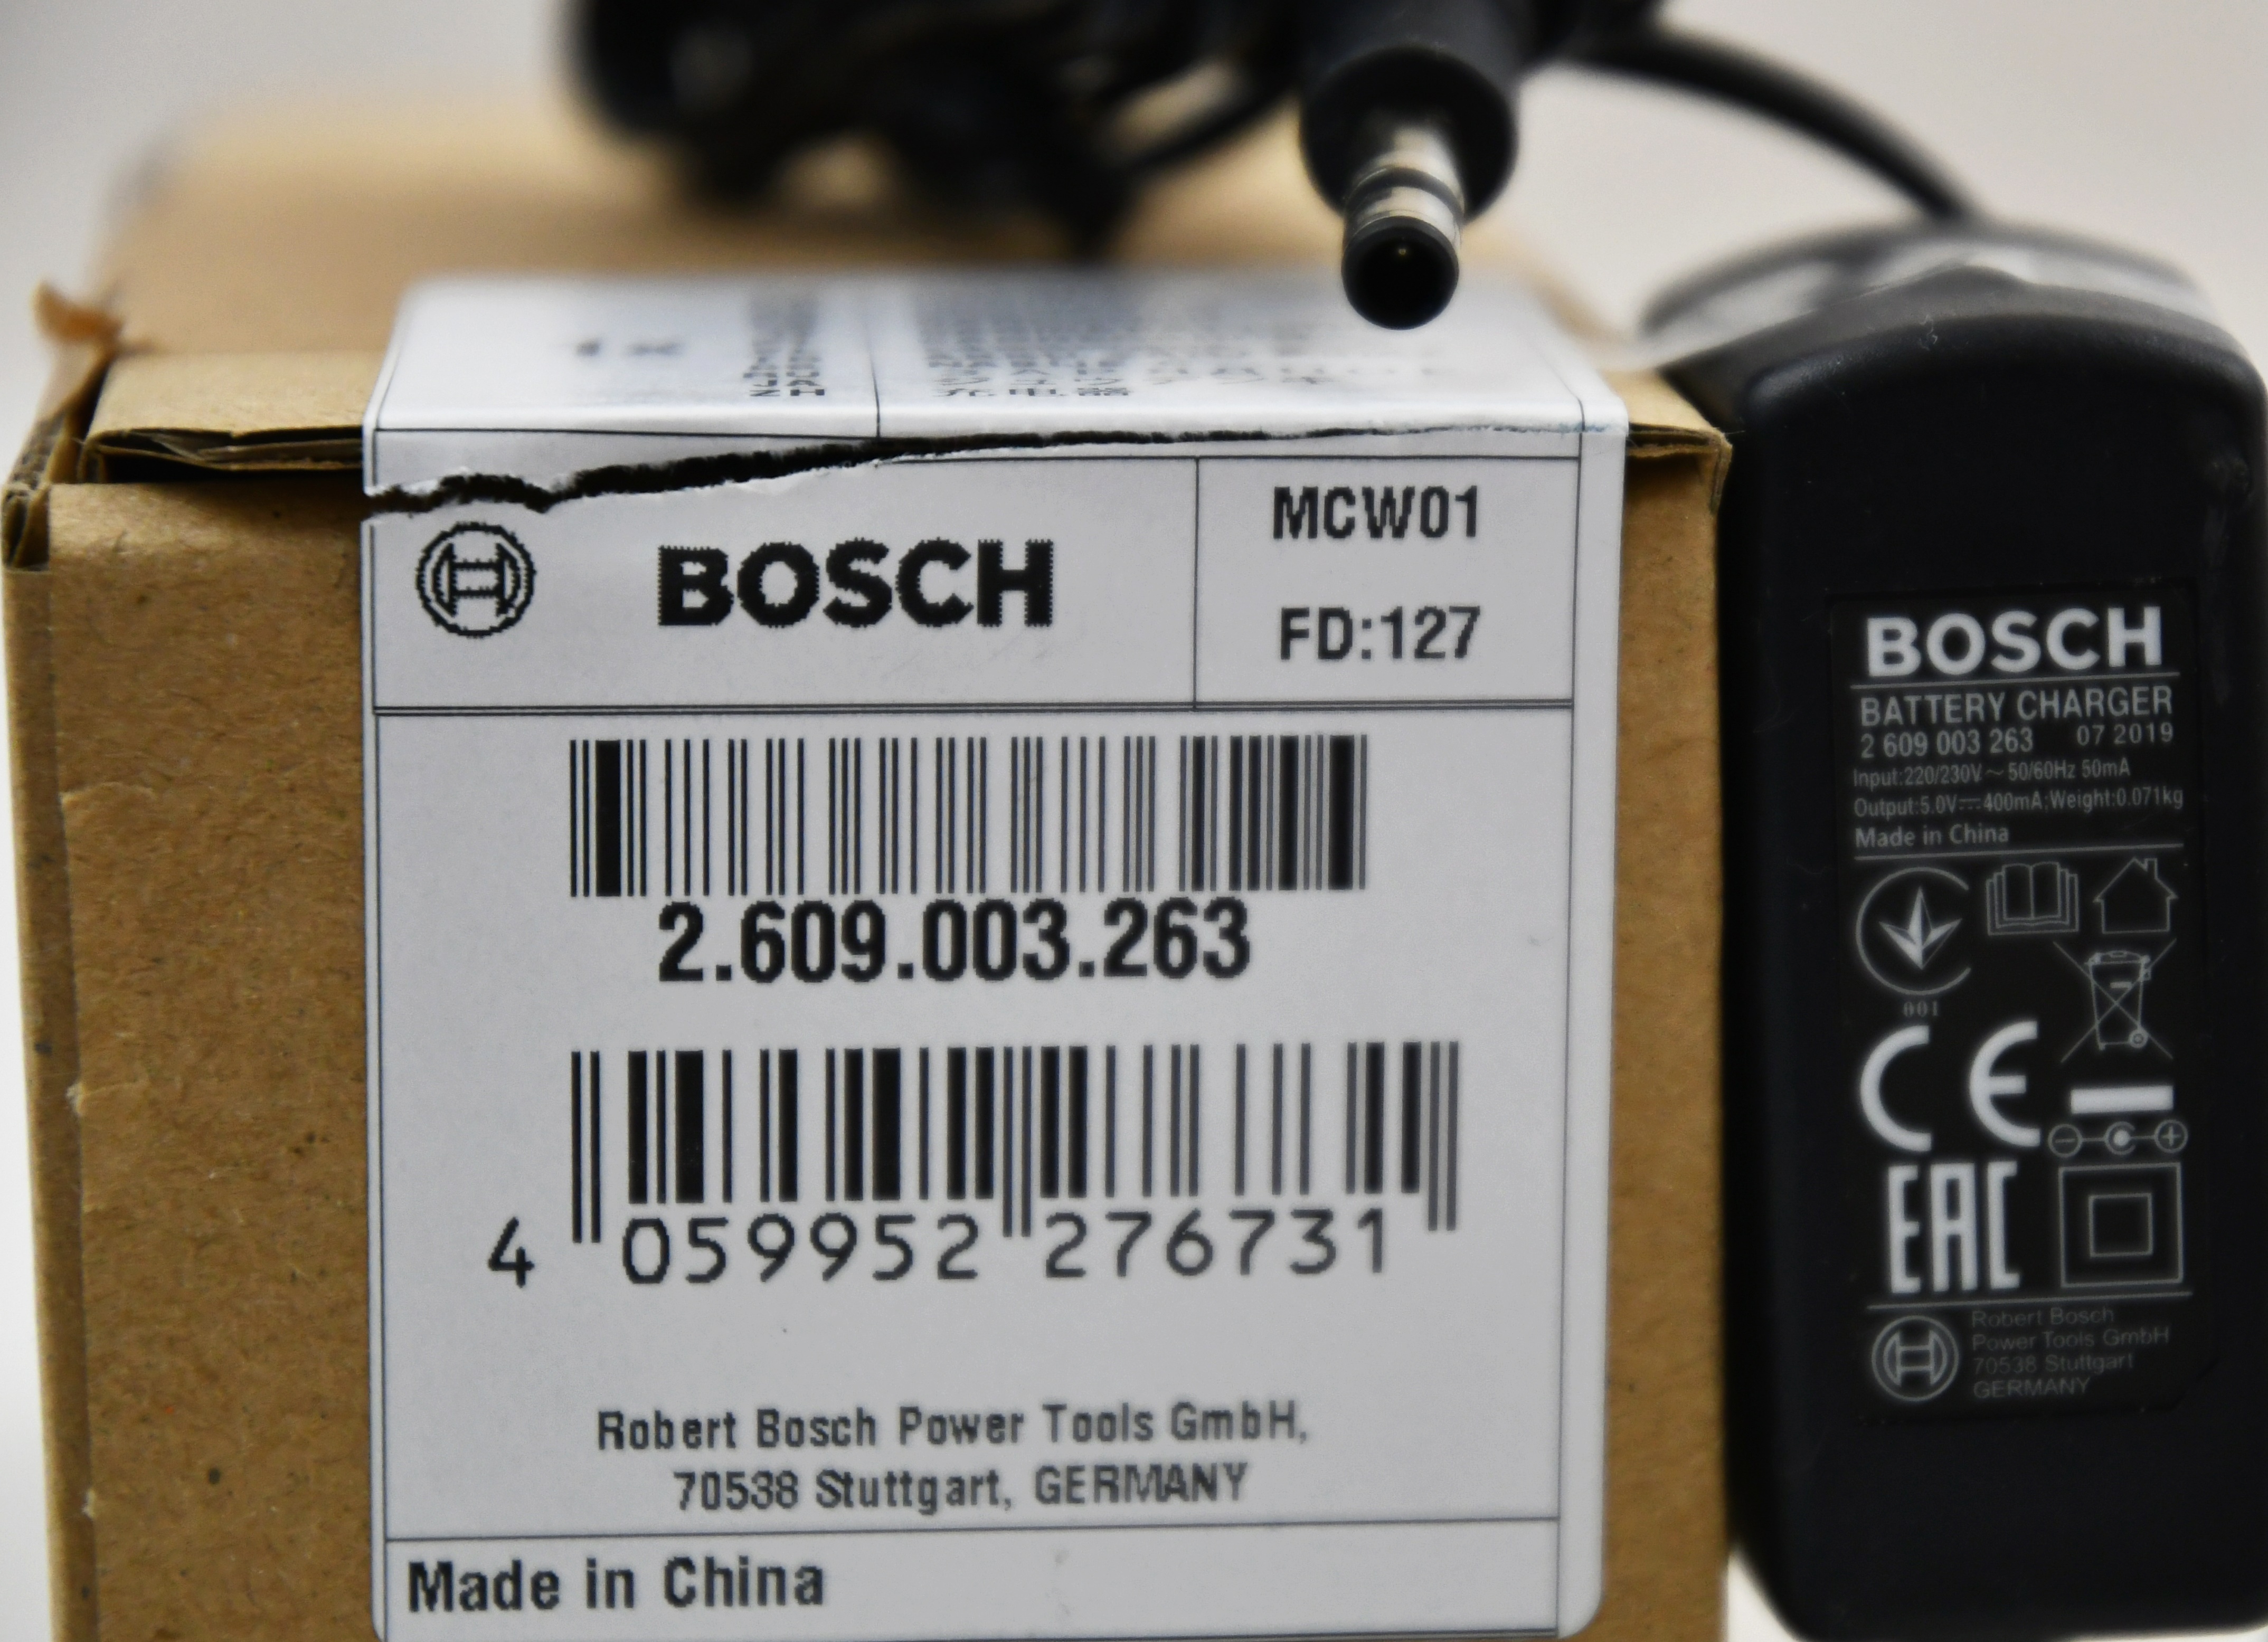 Bosch 2609003263 original Ladegerät für Isio, PSR Select, PTK 3.6 LI, Netzteil 